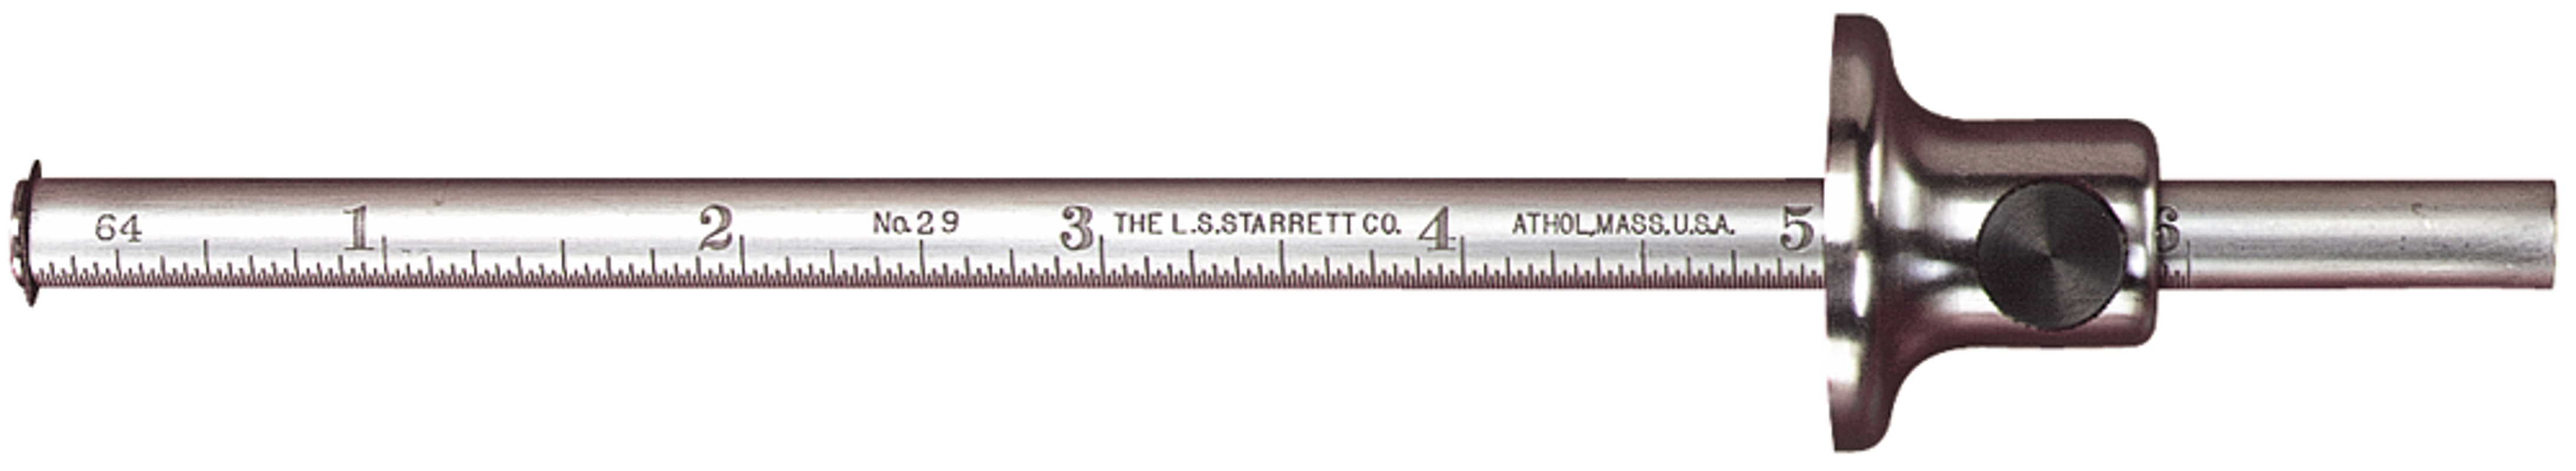 Starrett Pocket Scribers, Carbide Point 2 3/8